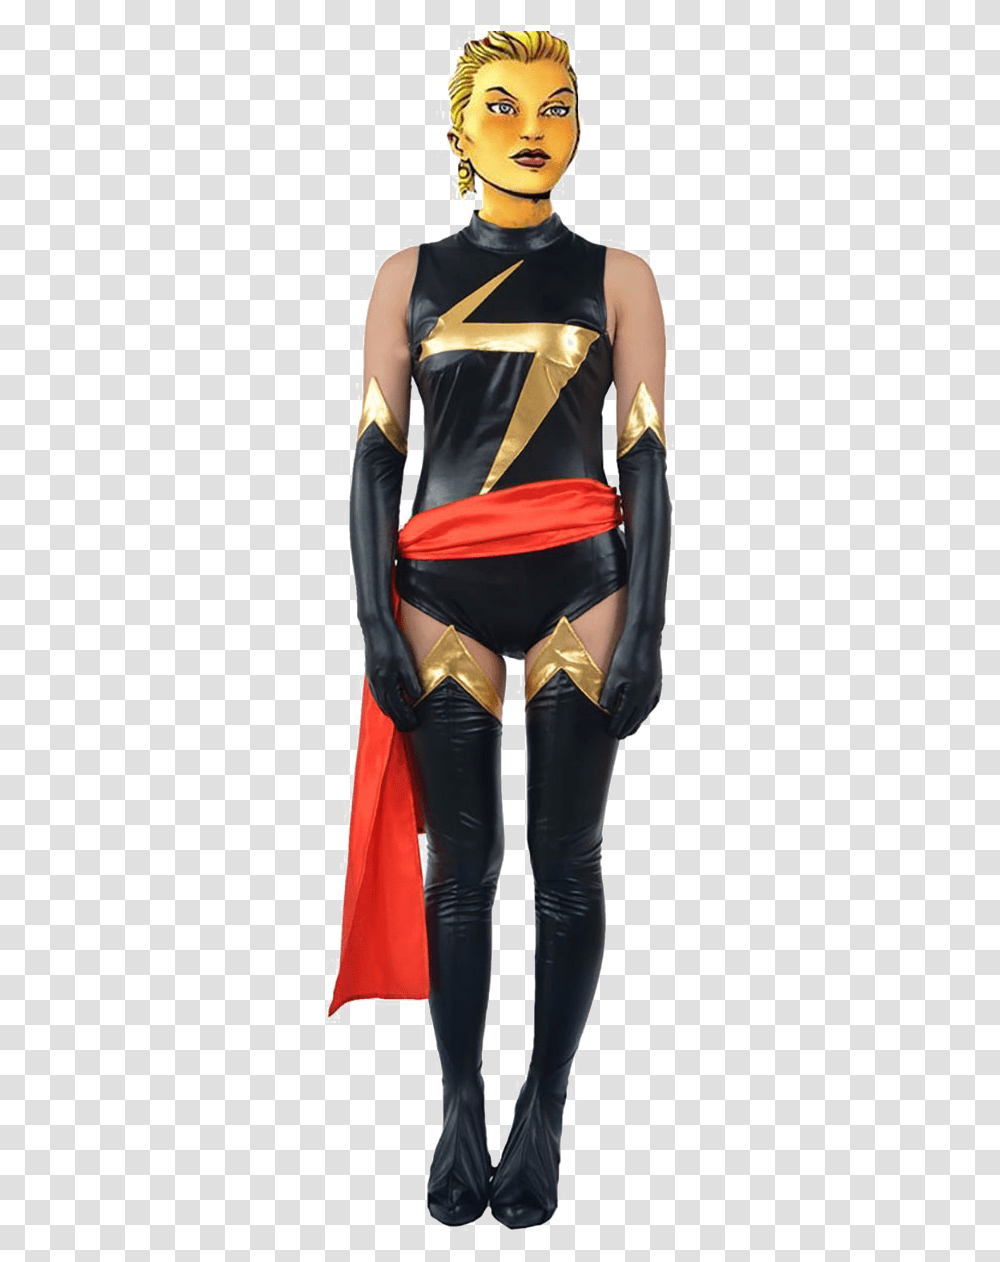 Carol Danvers High Quality Image Carol Danvers Ms Marvel Costume, Latex Clothing, Person, Human, Cosplay Transparent Png